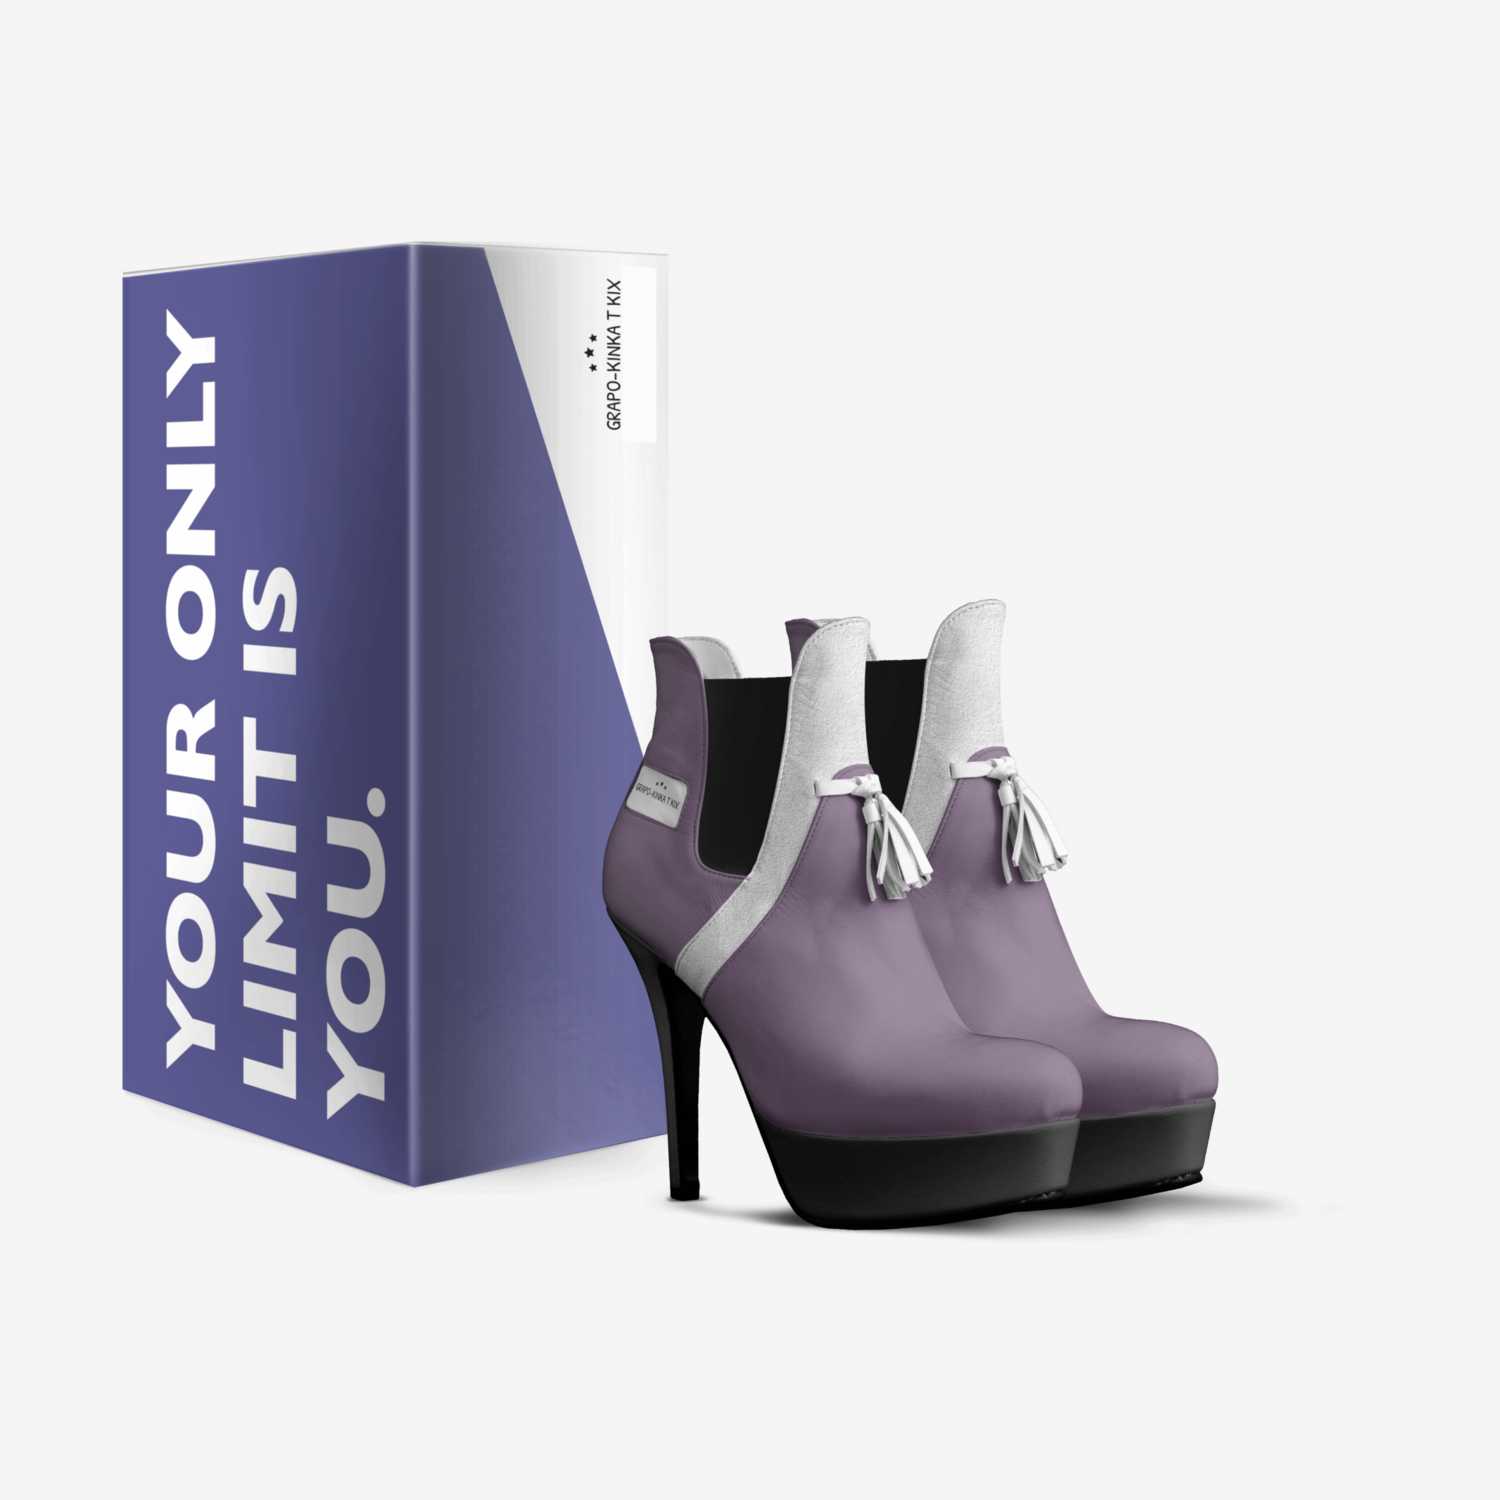 Grapo-Kinka T Kix custom made in Italy shoes by Kinka T Kix | Box view